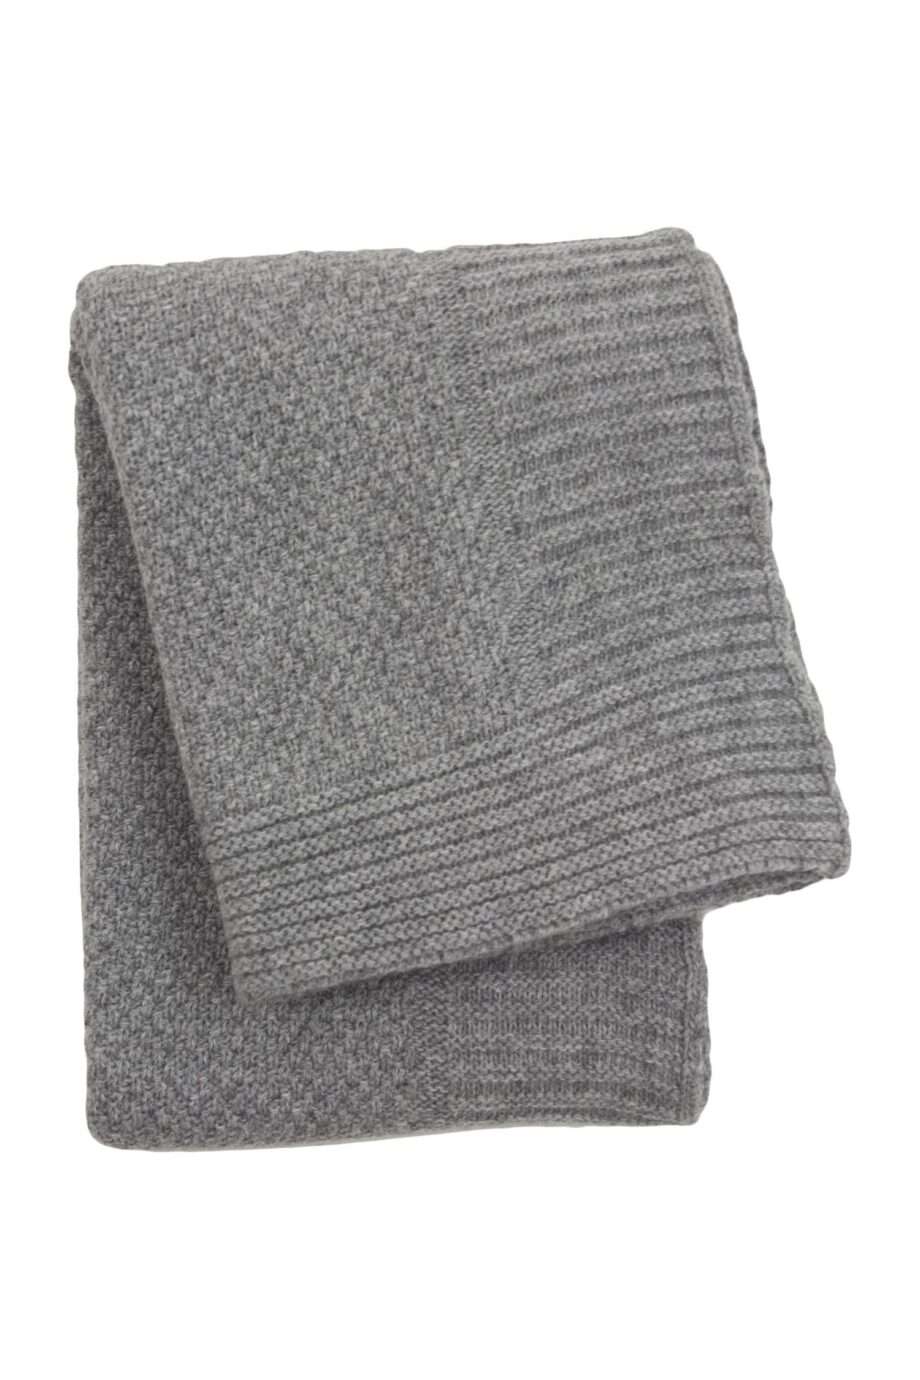 rice light grey knitted woolen little blanket small